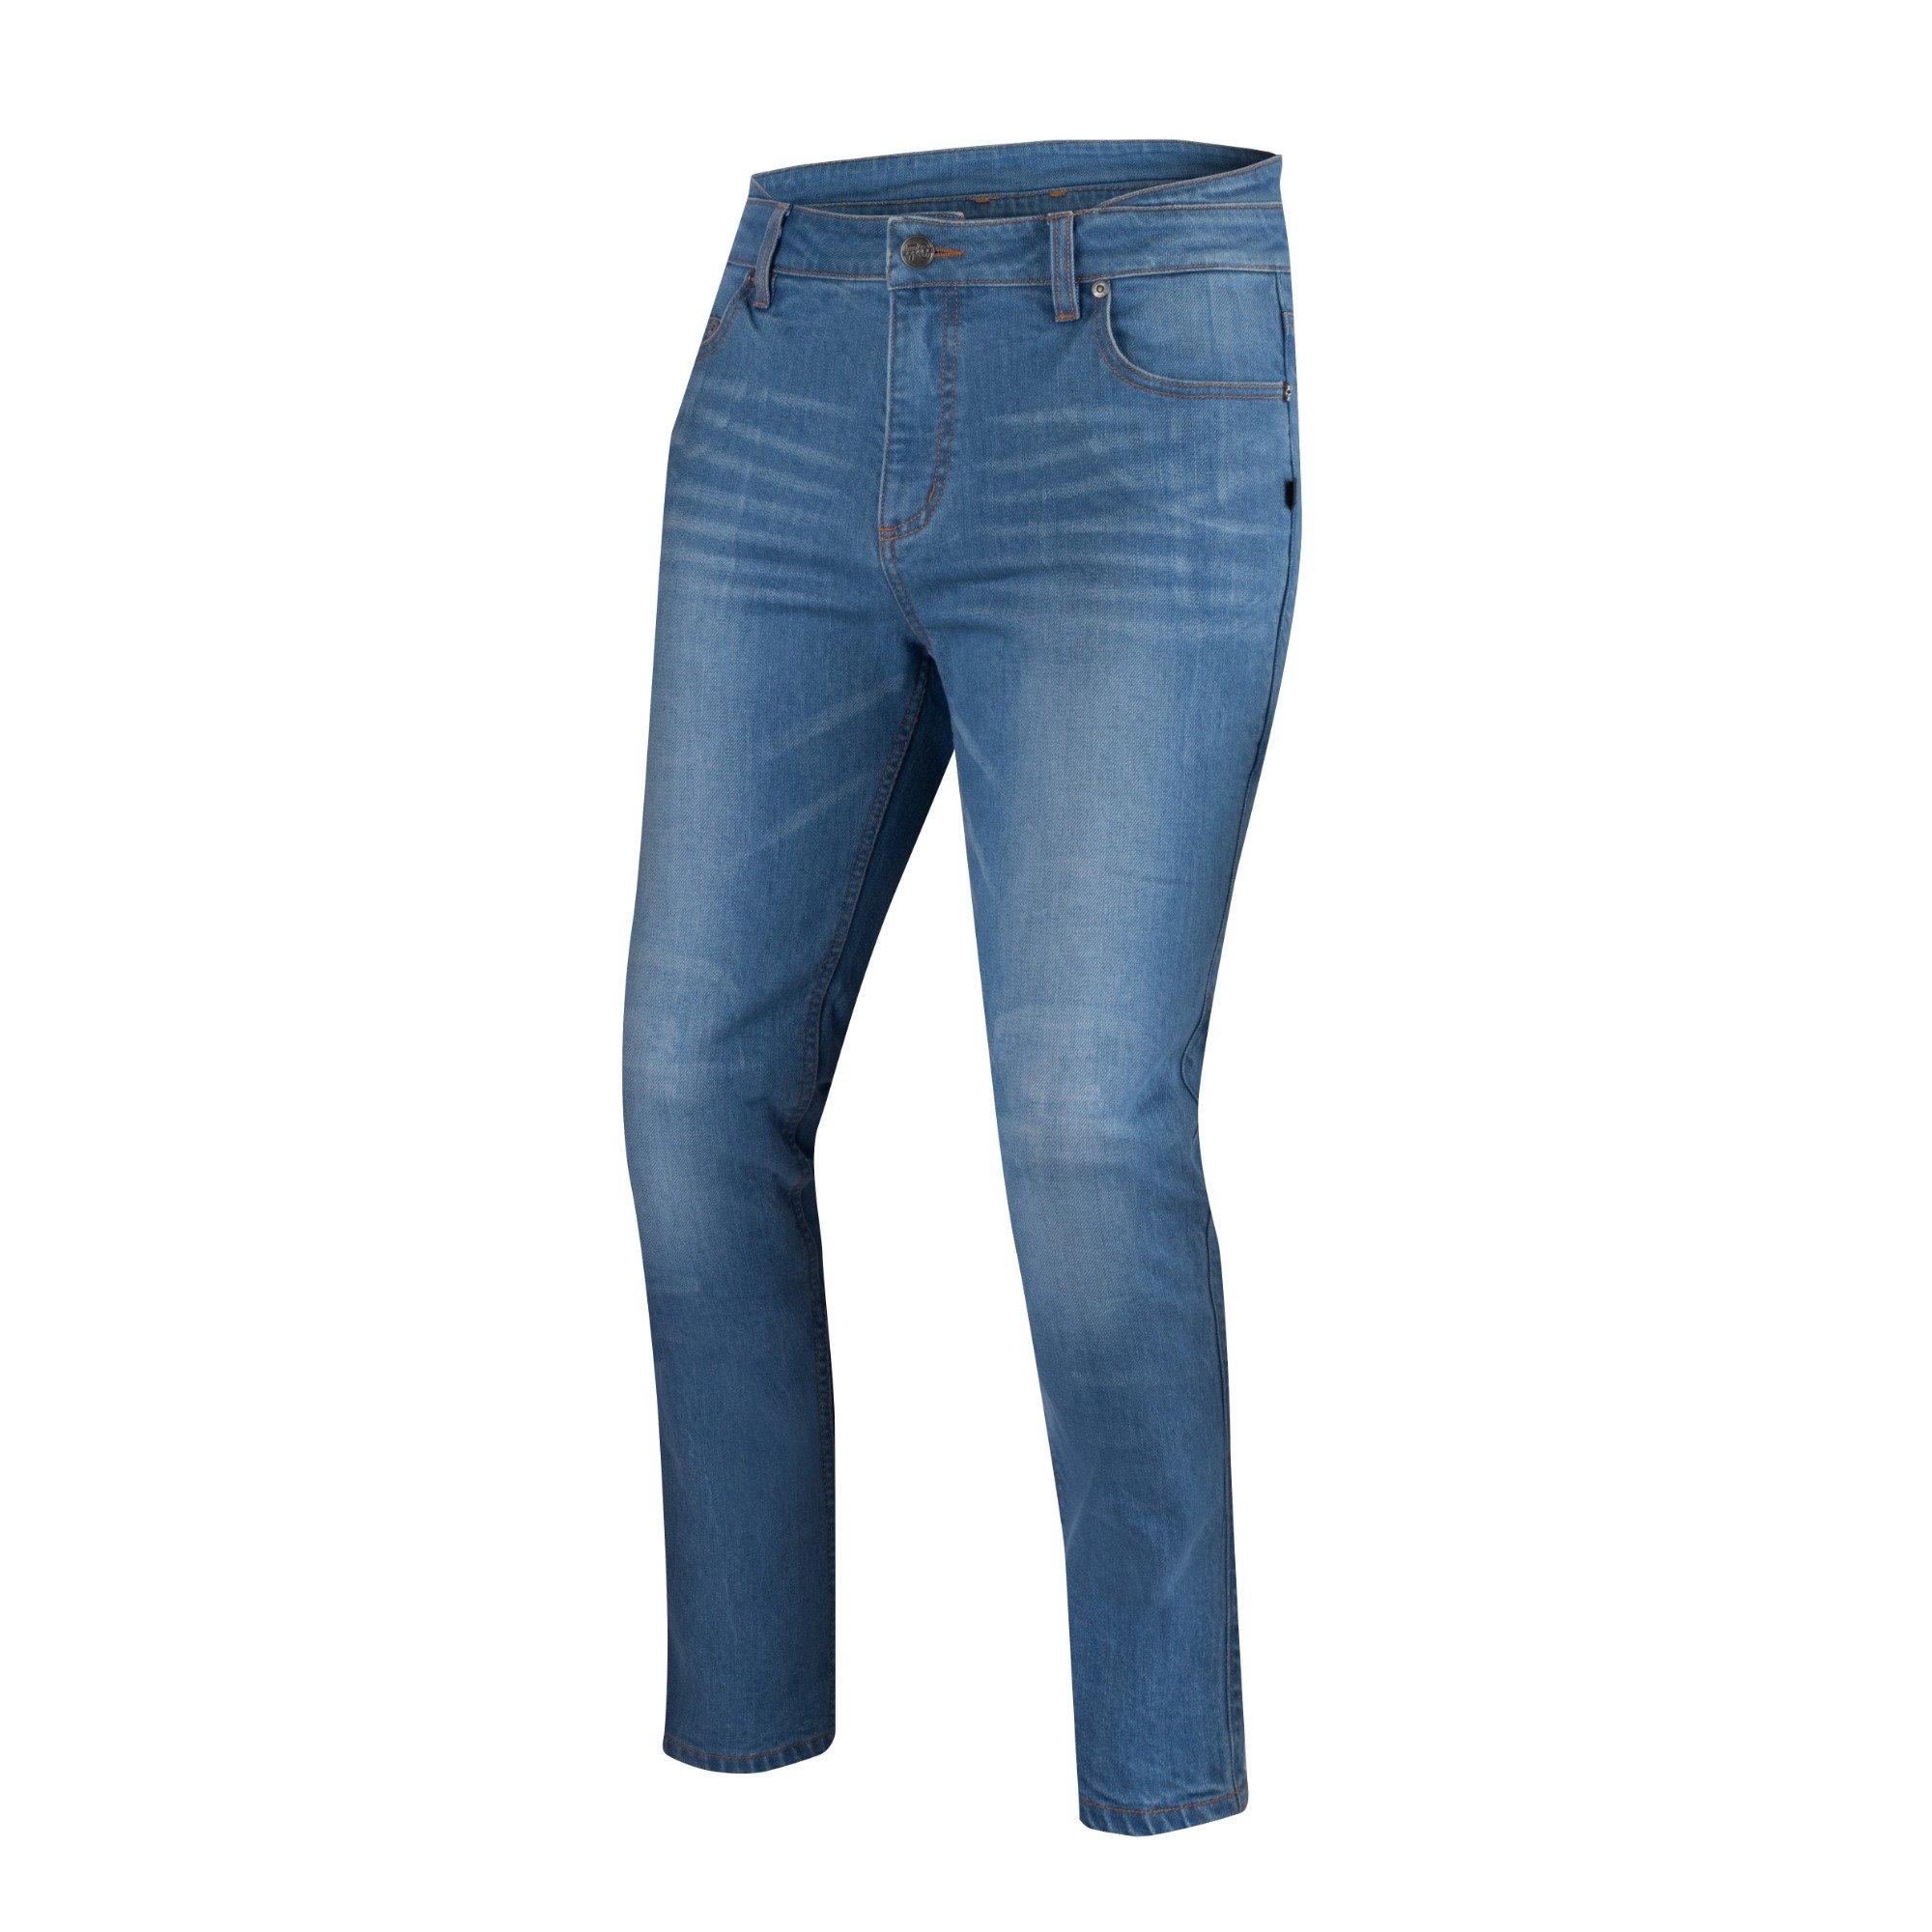 Image of Segura Trousers Rosco Blue Size M ID 3660815168073